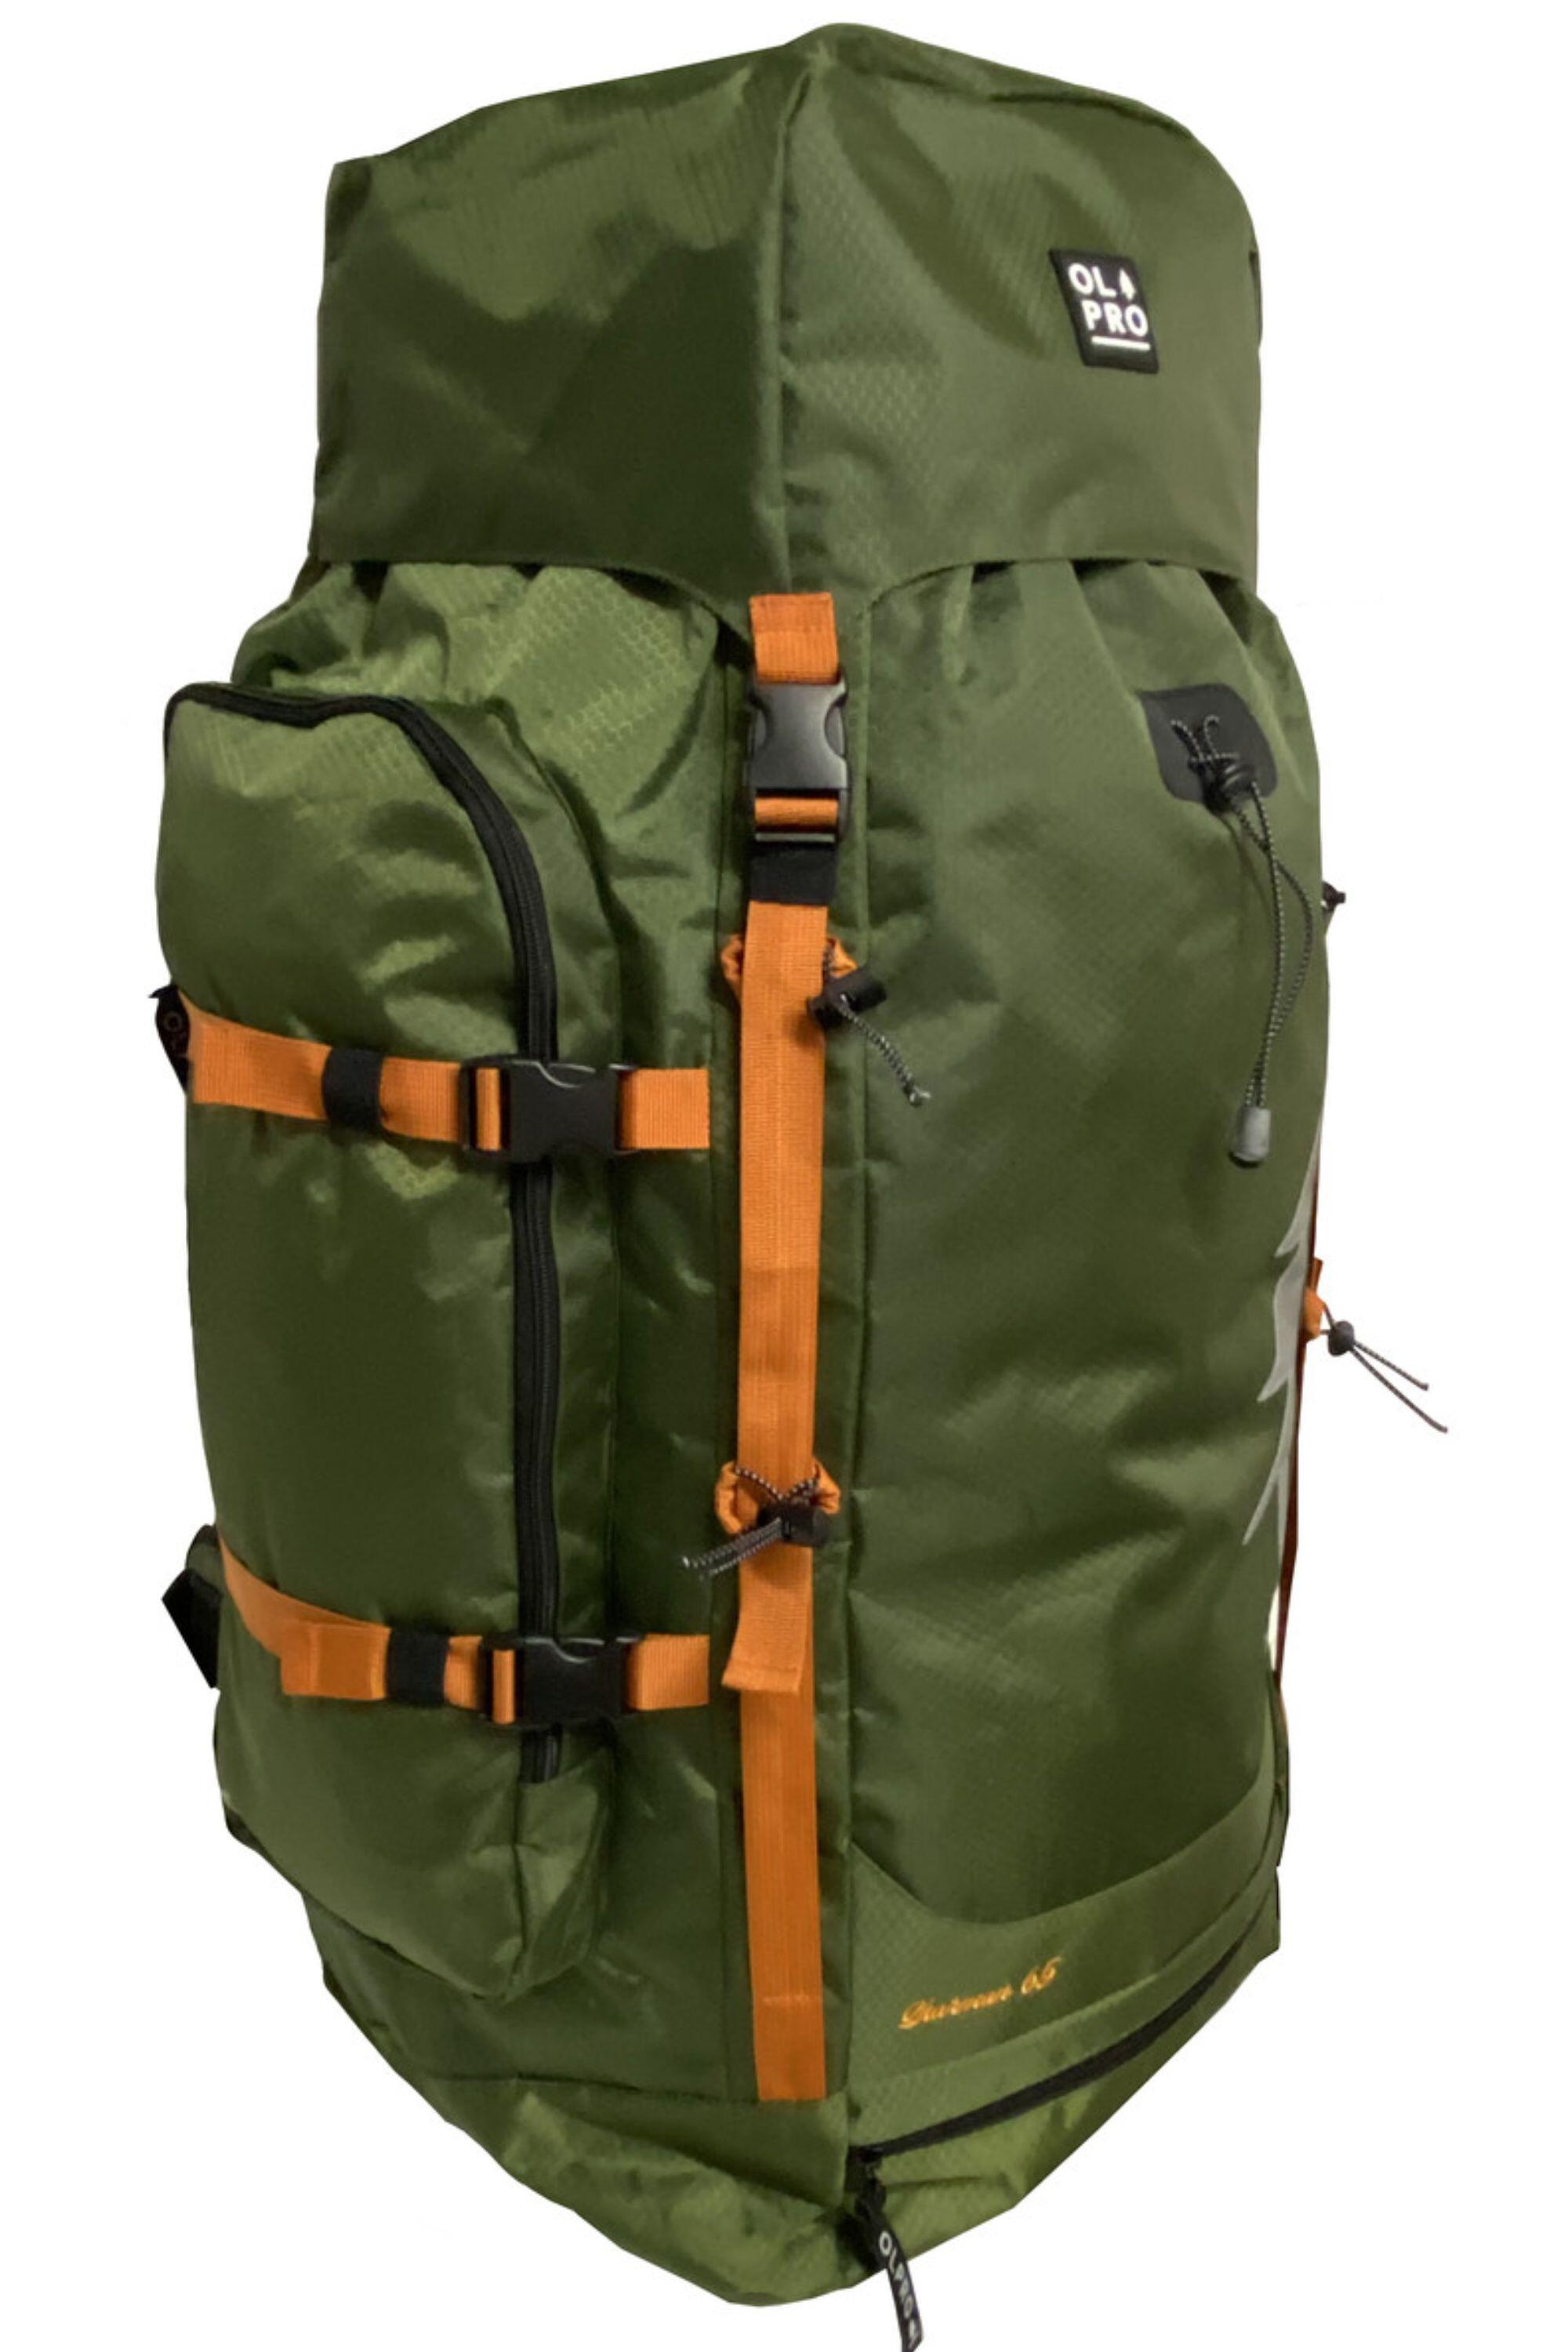 OLPRO OLPRO 65L Rucksack Bag Green